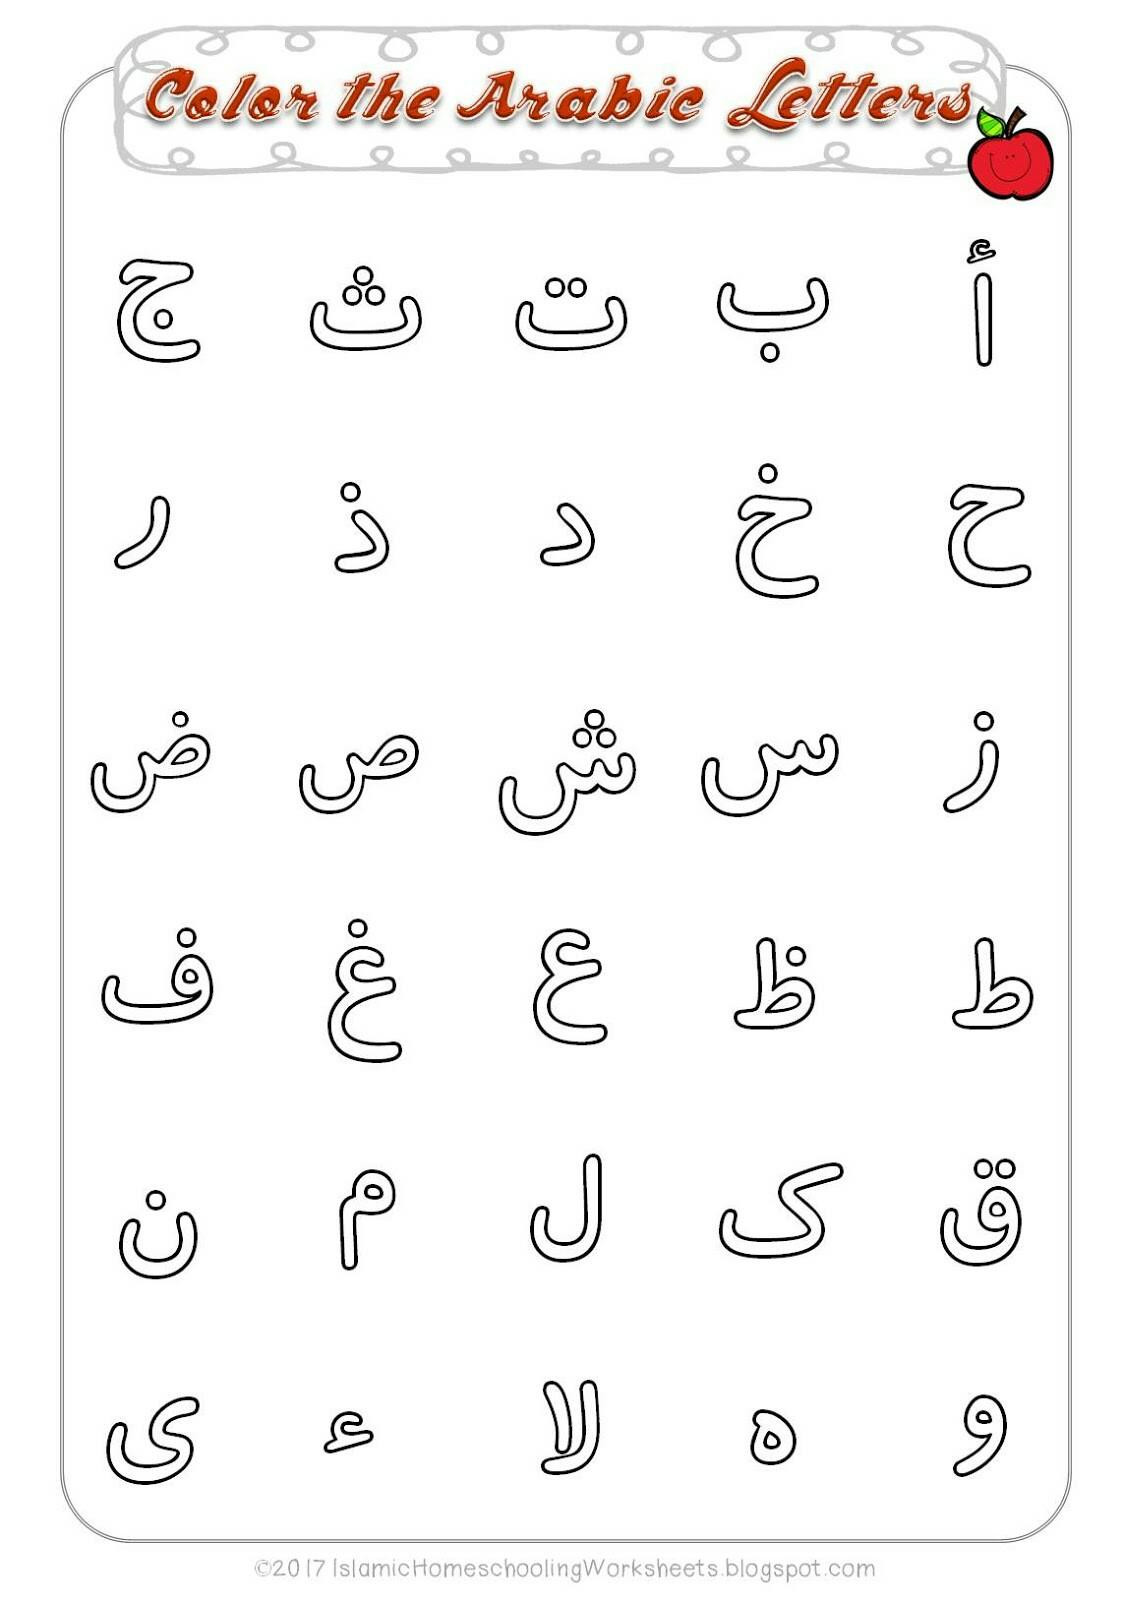 Arabic Alphabet Worksheets Printable Arabic Alphabet Worksheets for Preschoolers Pdf Clover